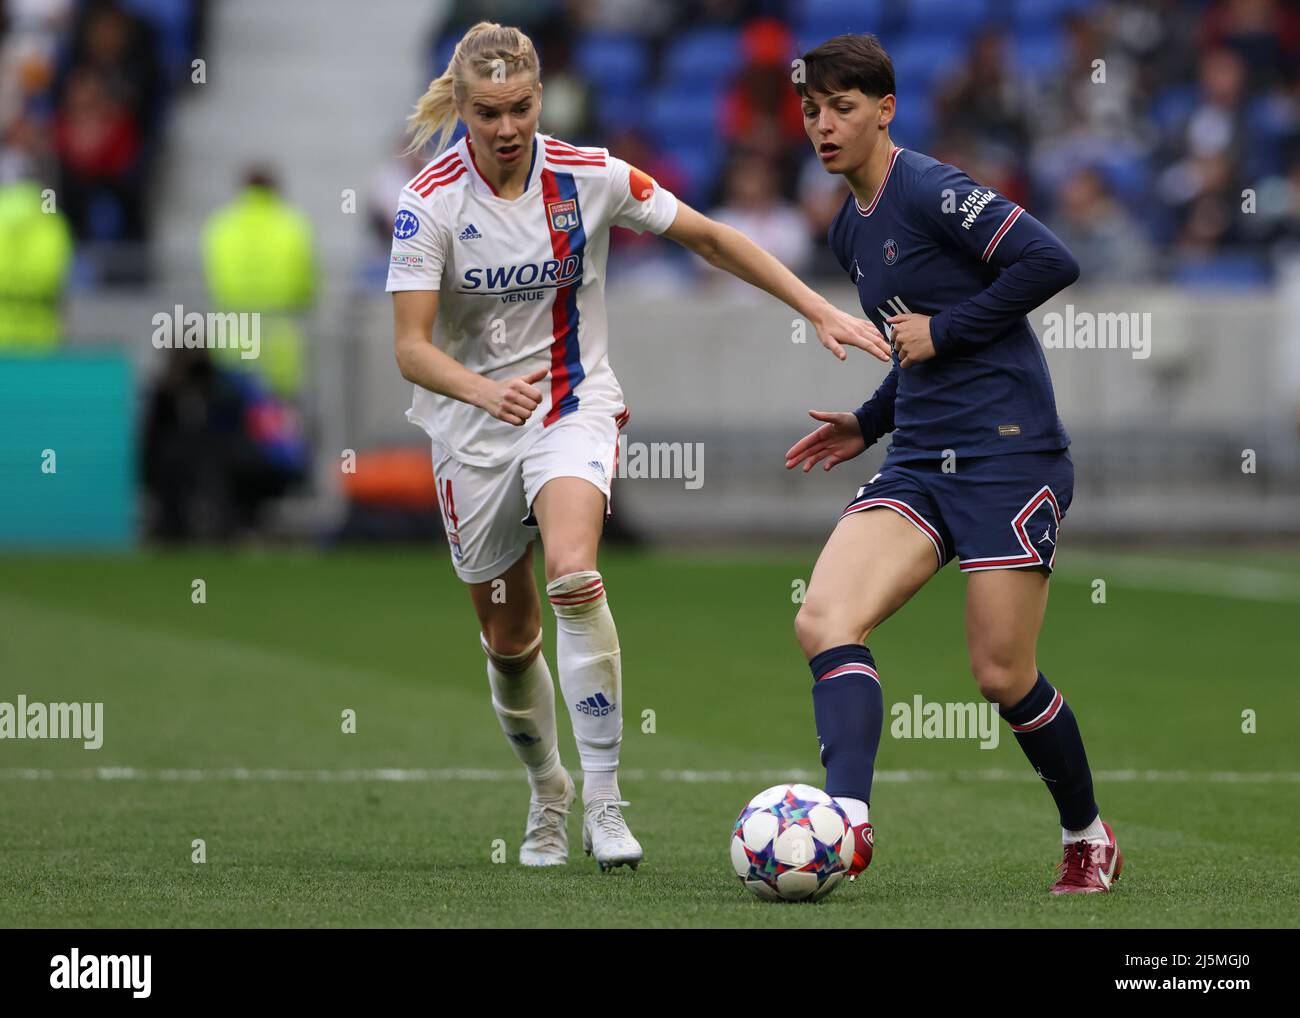 Lyon, France, 24th April 2022. Elisa De Almeida of PSG lays the ball off as  Ada Hegerberg of Lyon closes in during the UEFA Womens Champions League  match at OL Stadium, Lyon.